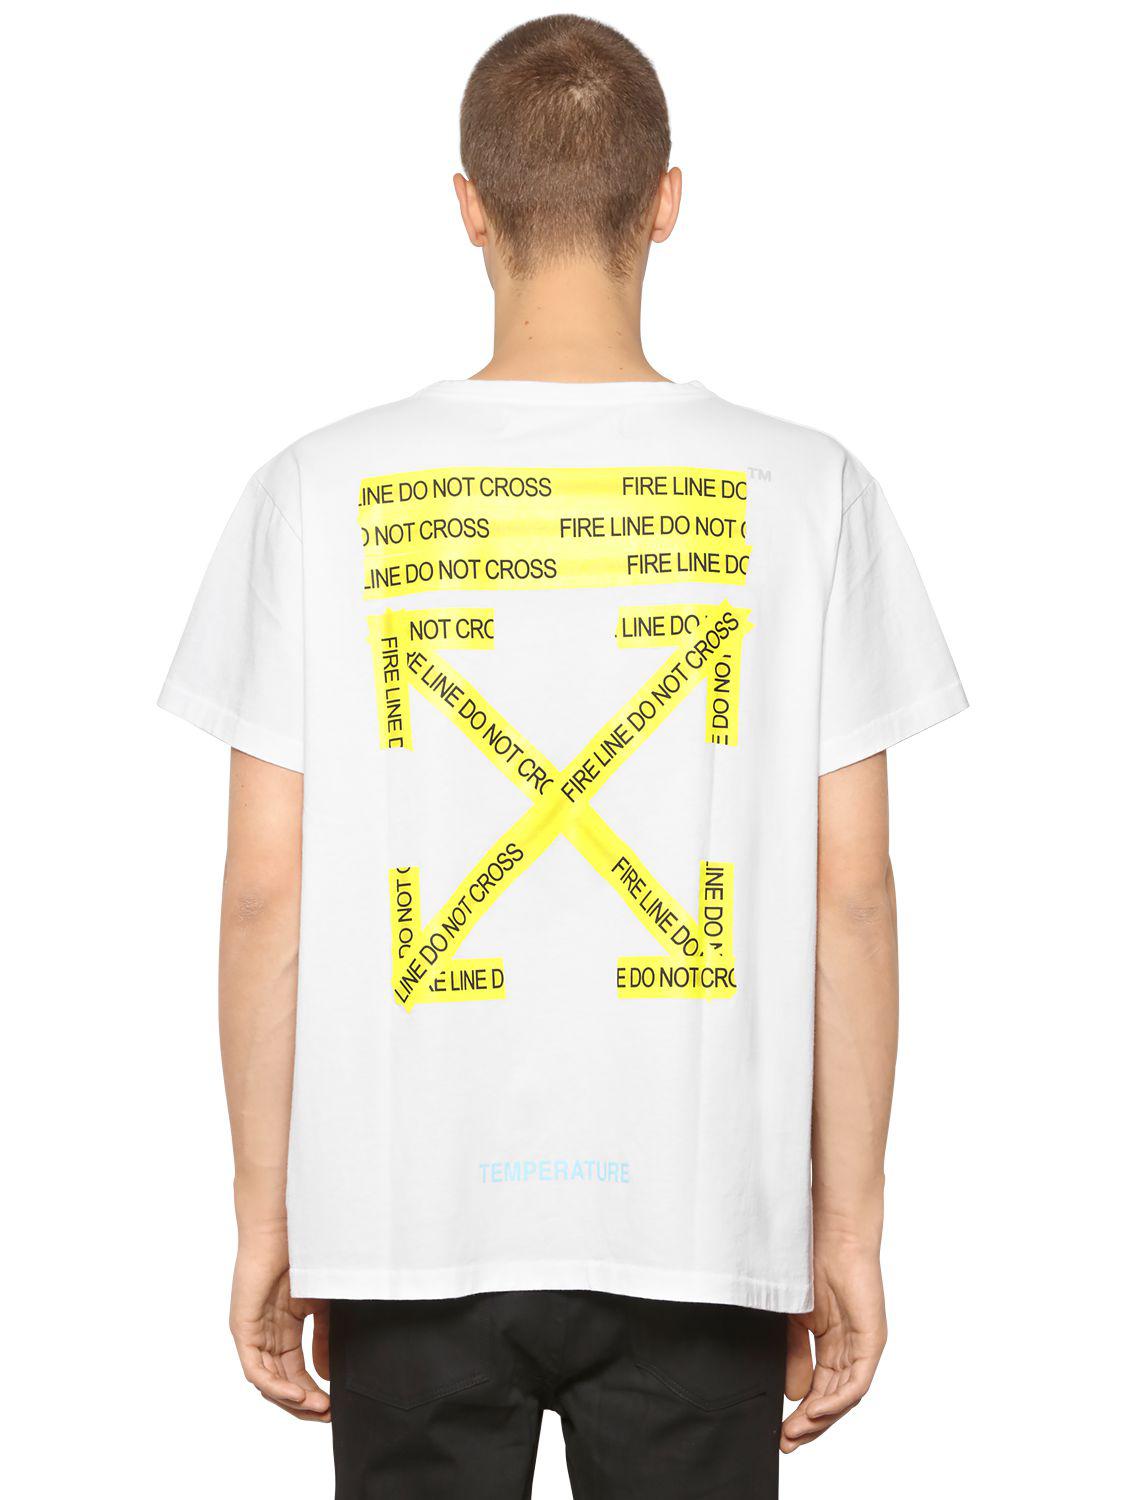 Off-White c/o Virgil Abloh Oversize Fire Line Tape Jersey T-shirt in White/Yellow  (White) for Men - Lyst